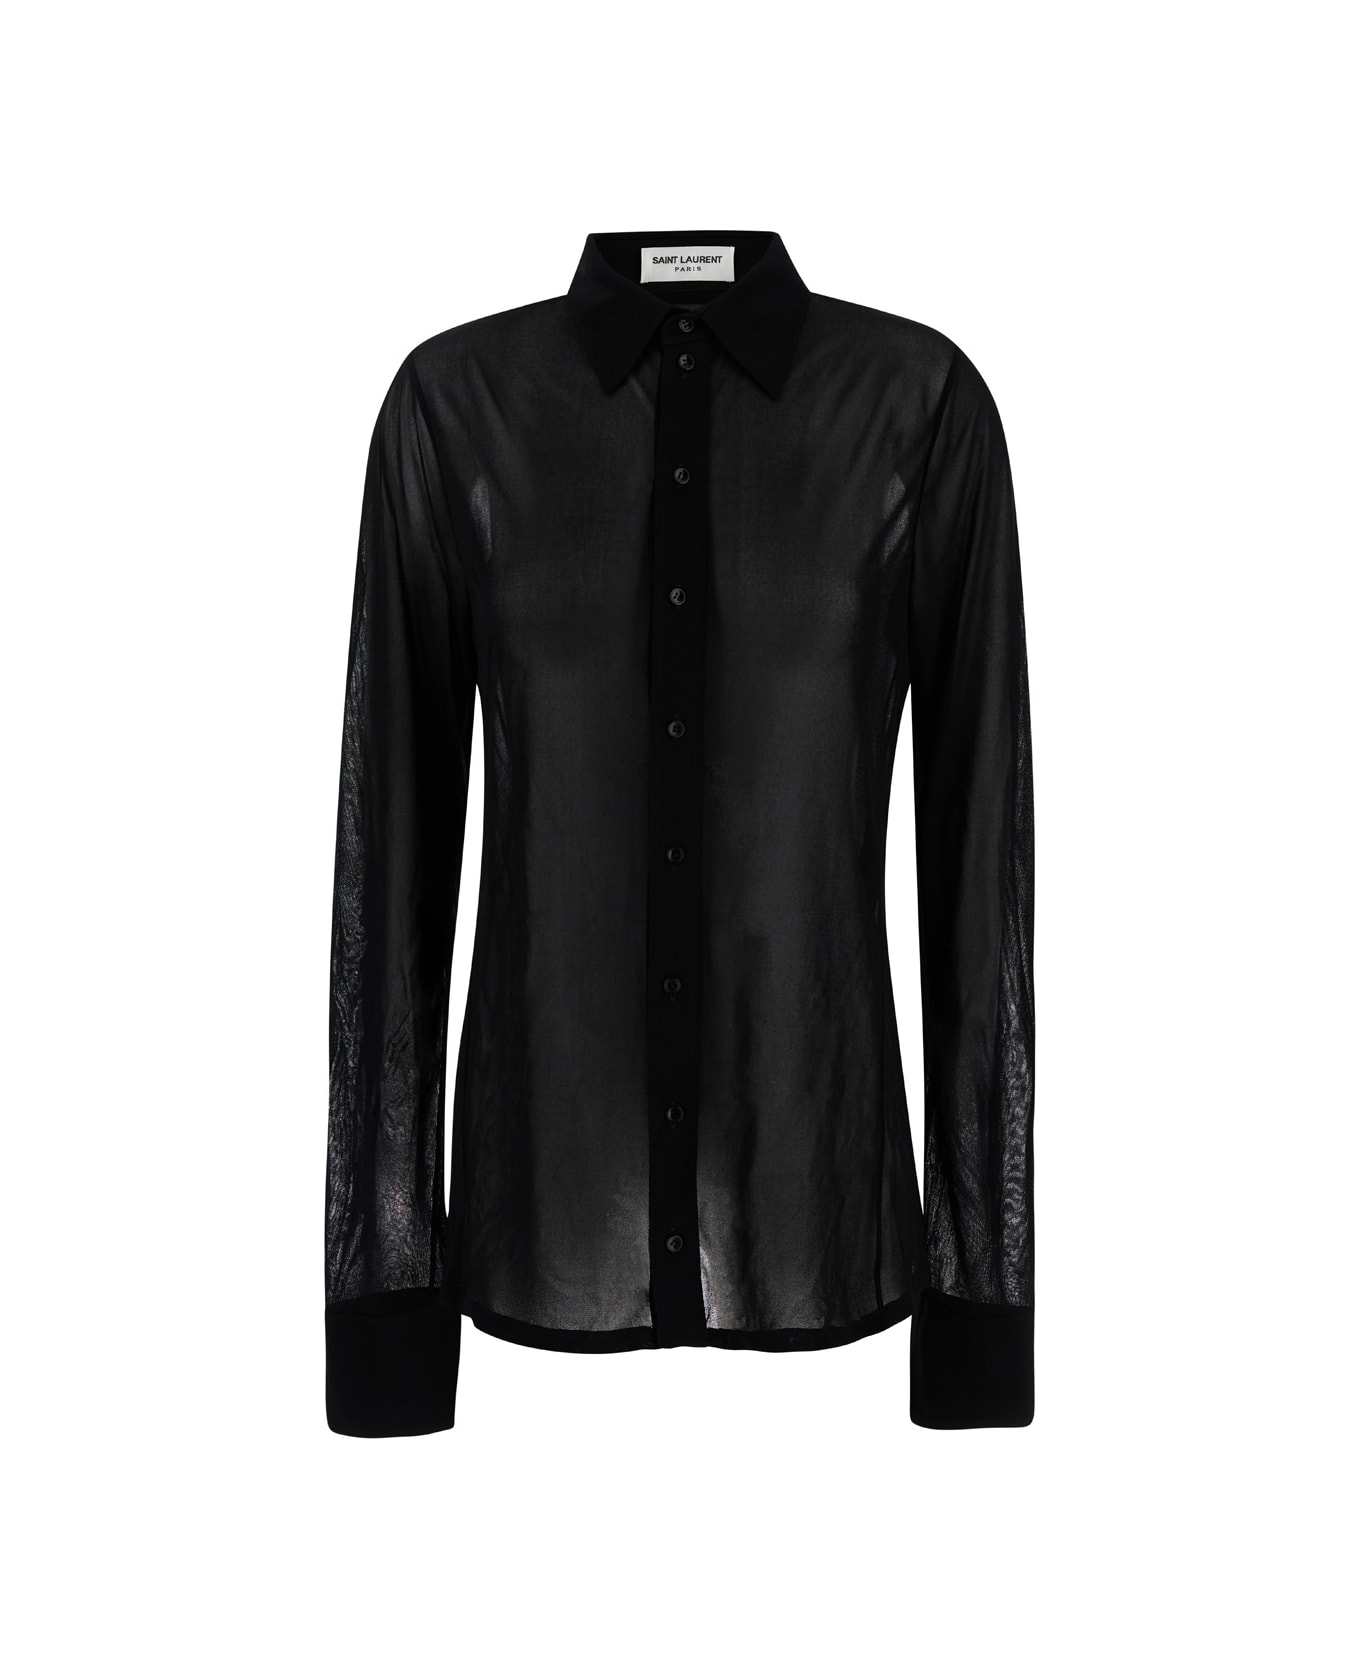 Saint Laurent Black Shirt With Transparent Effect In Jersey Crepe Woman - Black